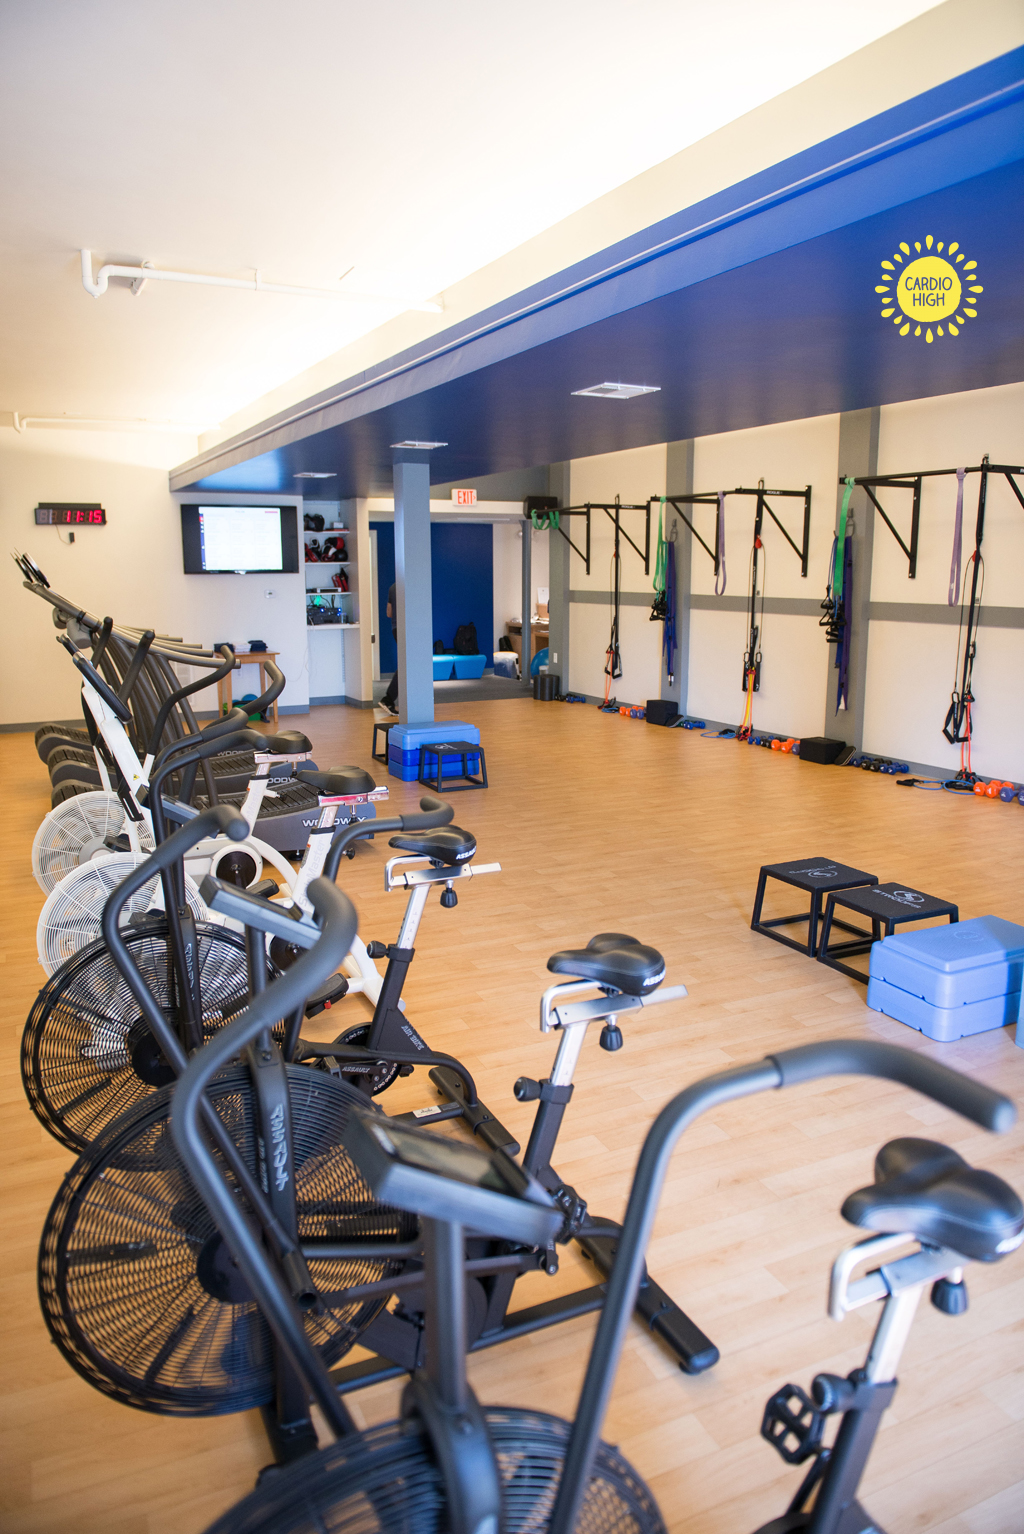 image of The beautiful Cardio High fitness studio